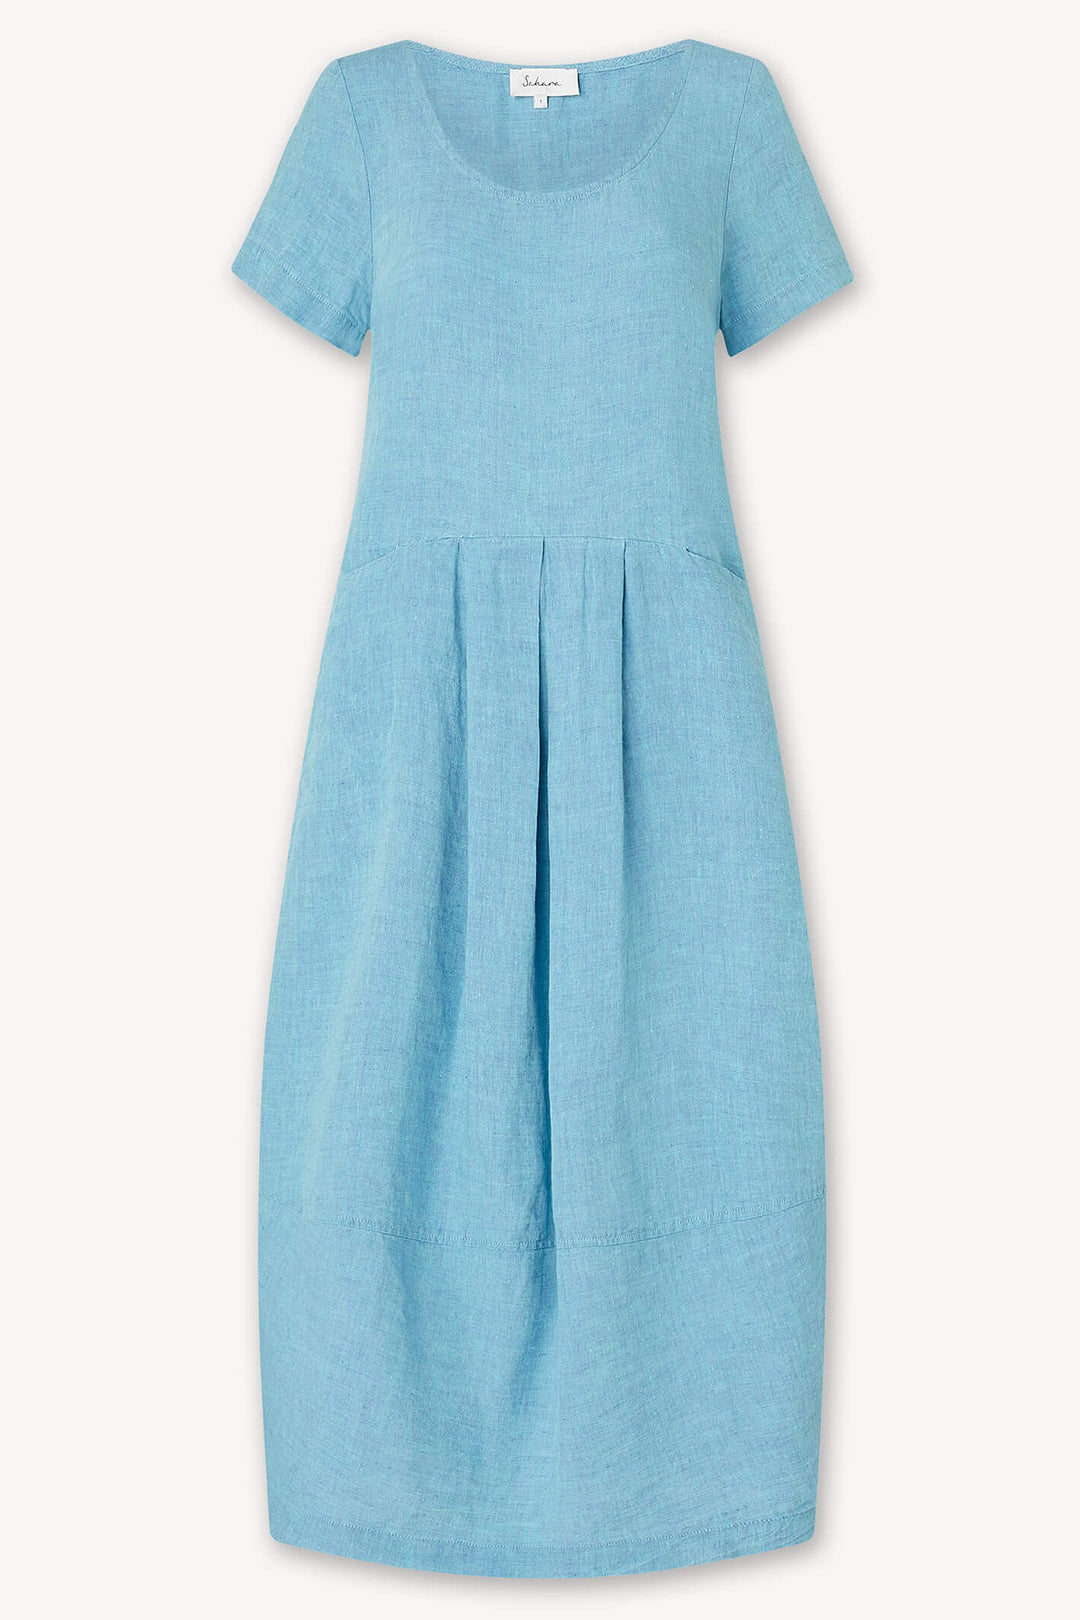 Sahara LAD5300-NCD Sky Blue Cross Dye Linen Bubble Dress - Shirley Allum Boutique